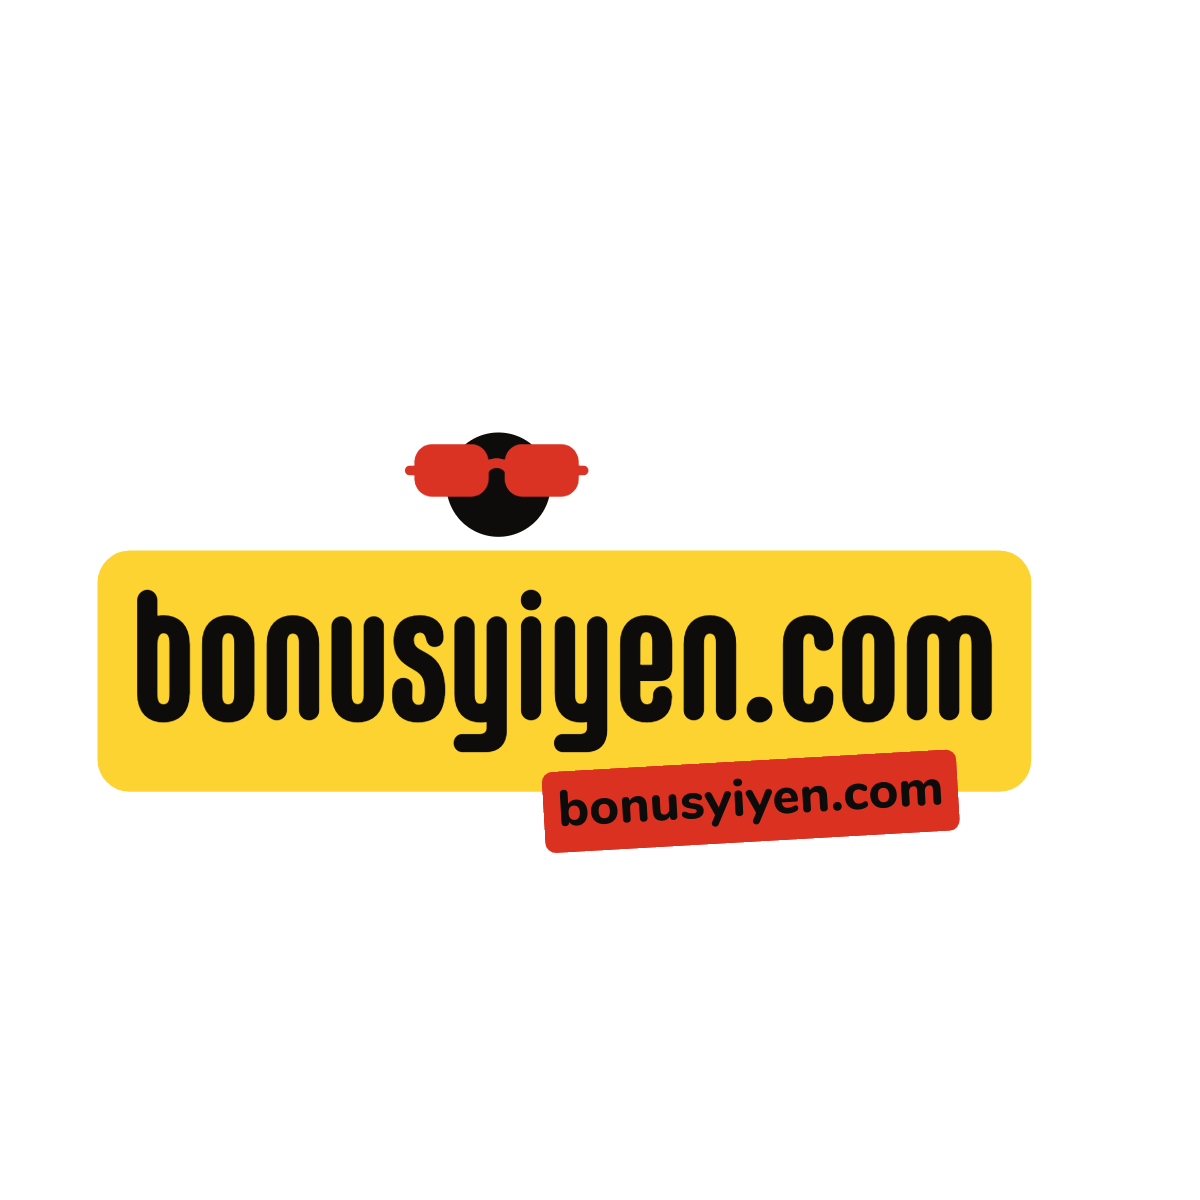 bonusyiyen.com